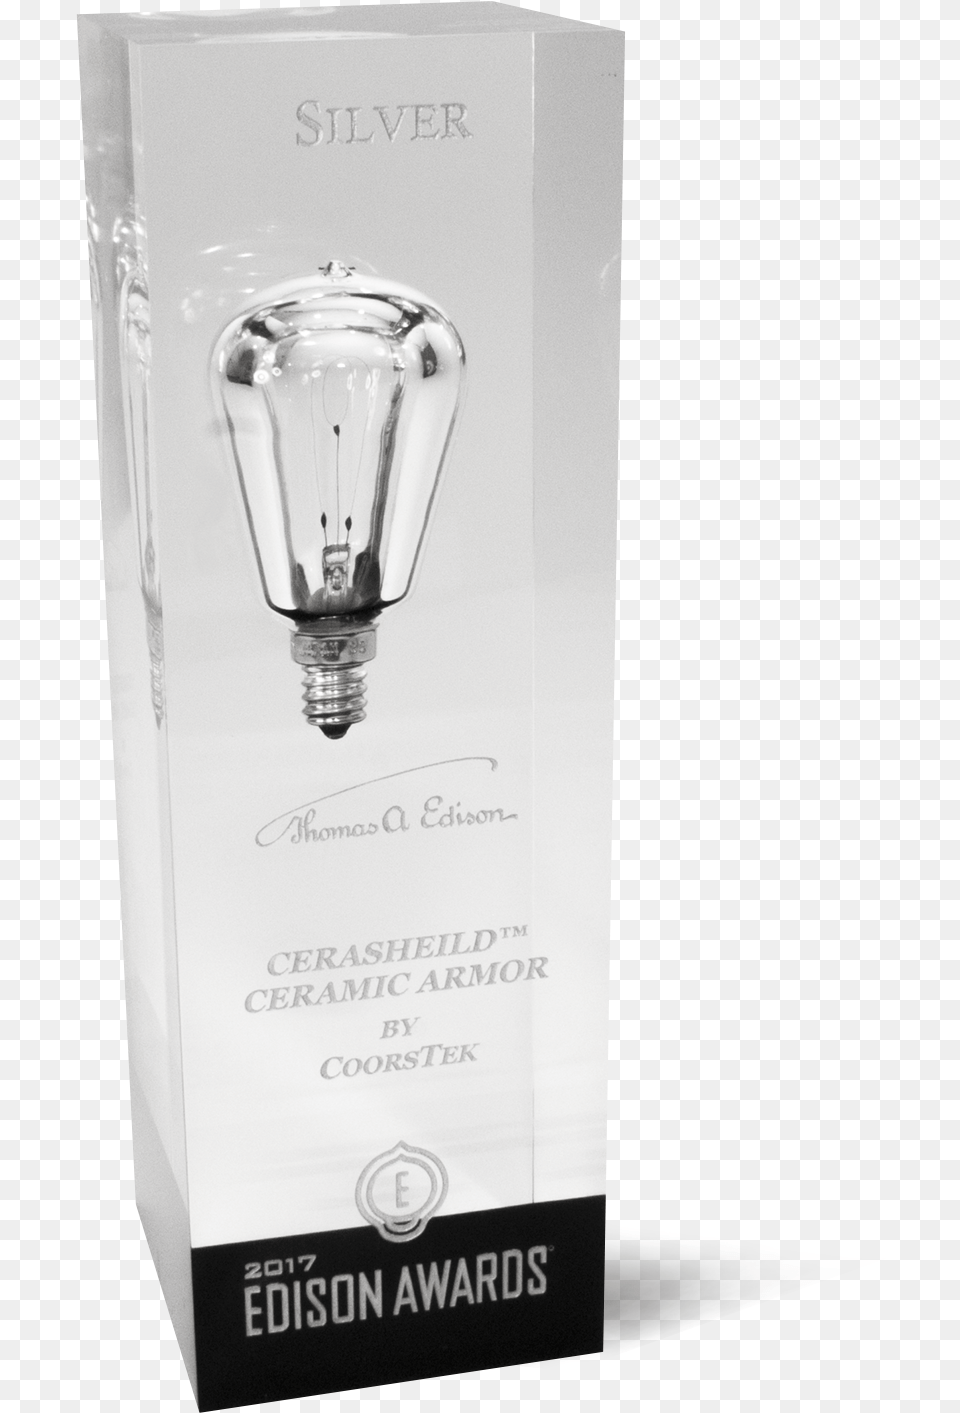 Coorstek Cerashield Ceramic Armor Lamp, Light, Lightbulb Png